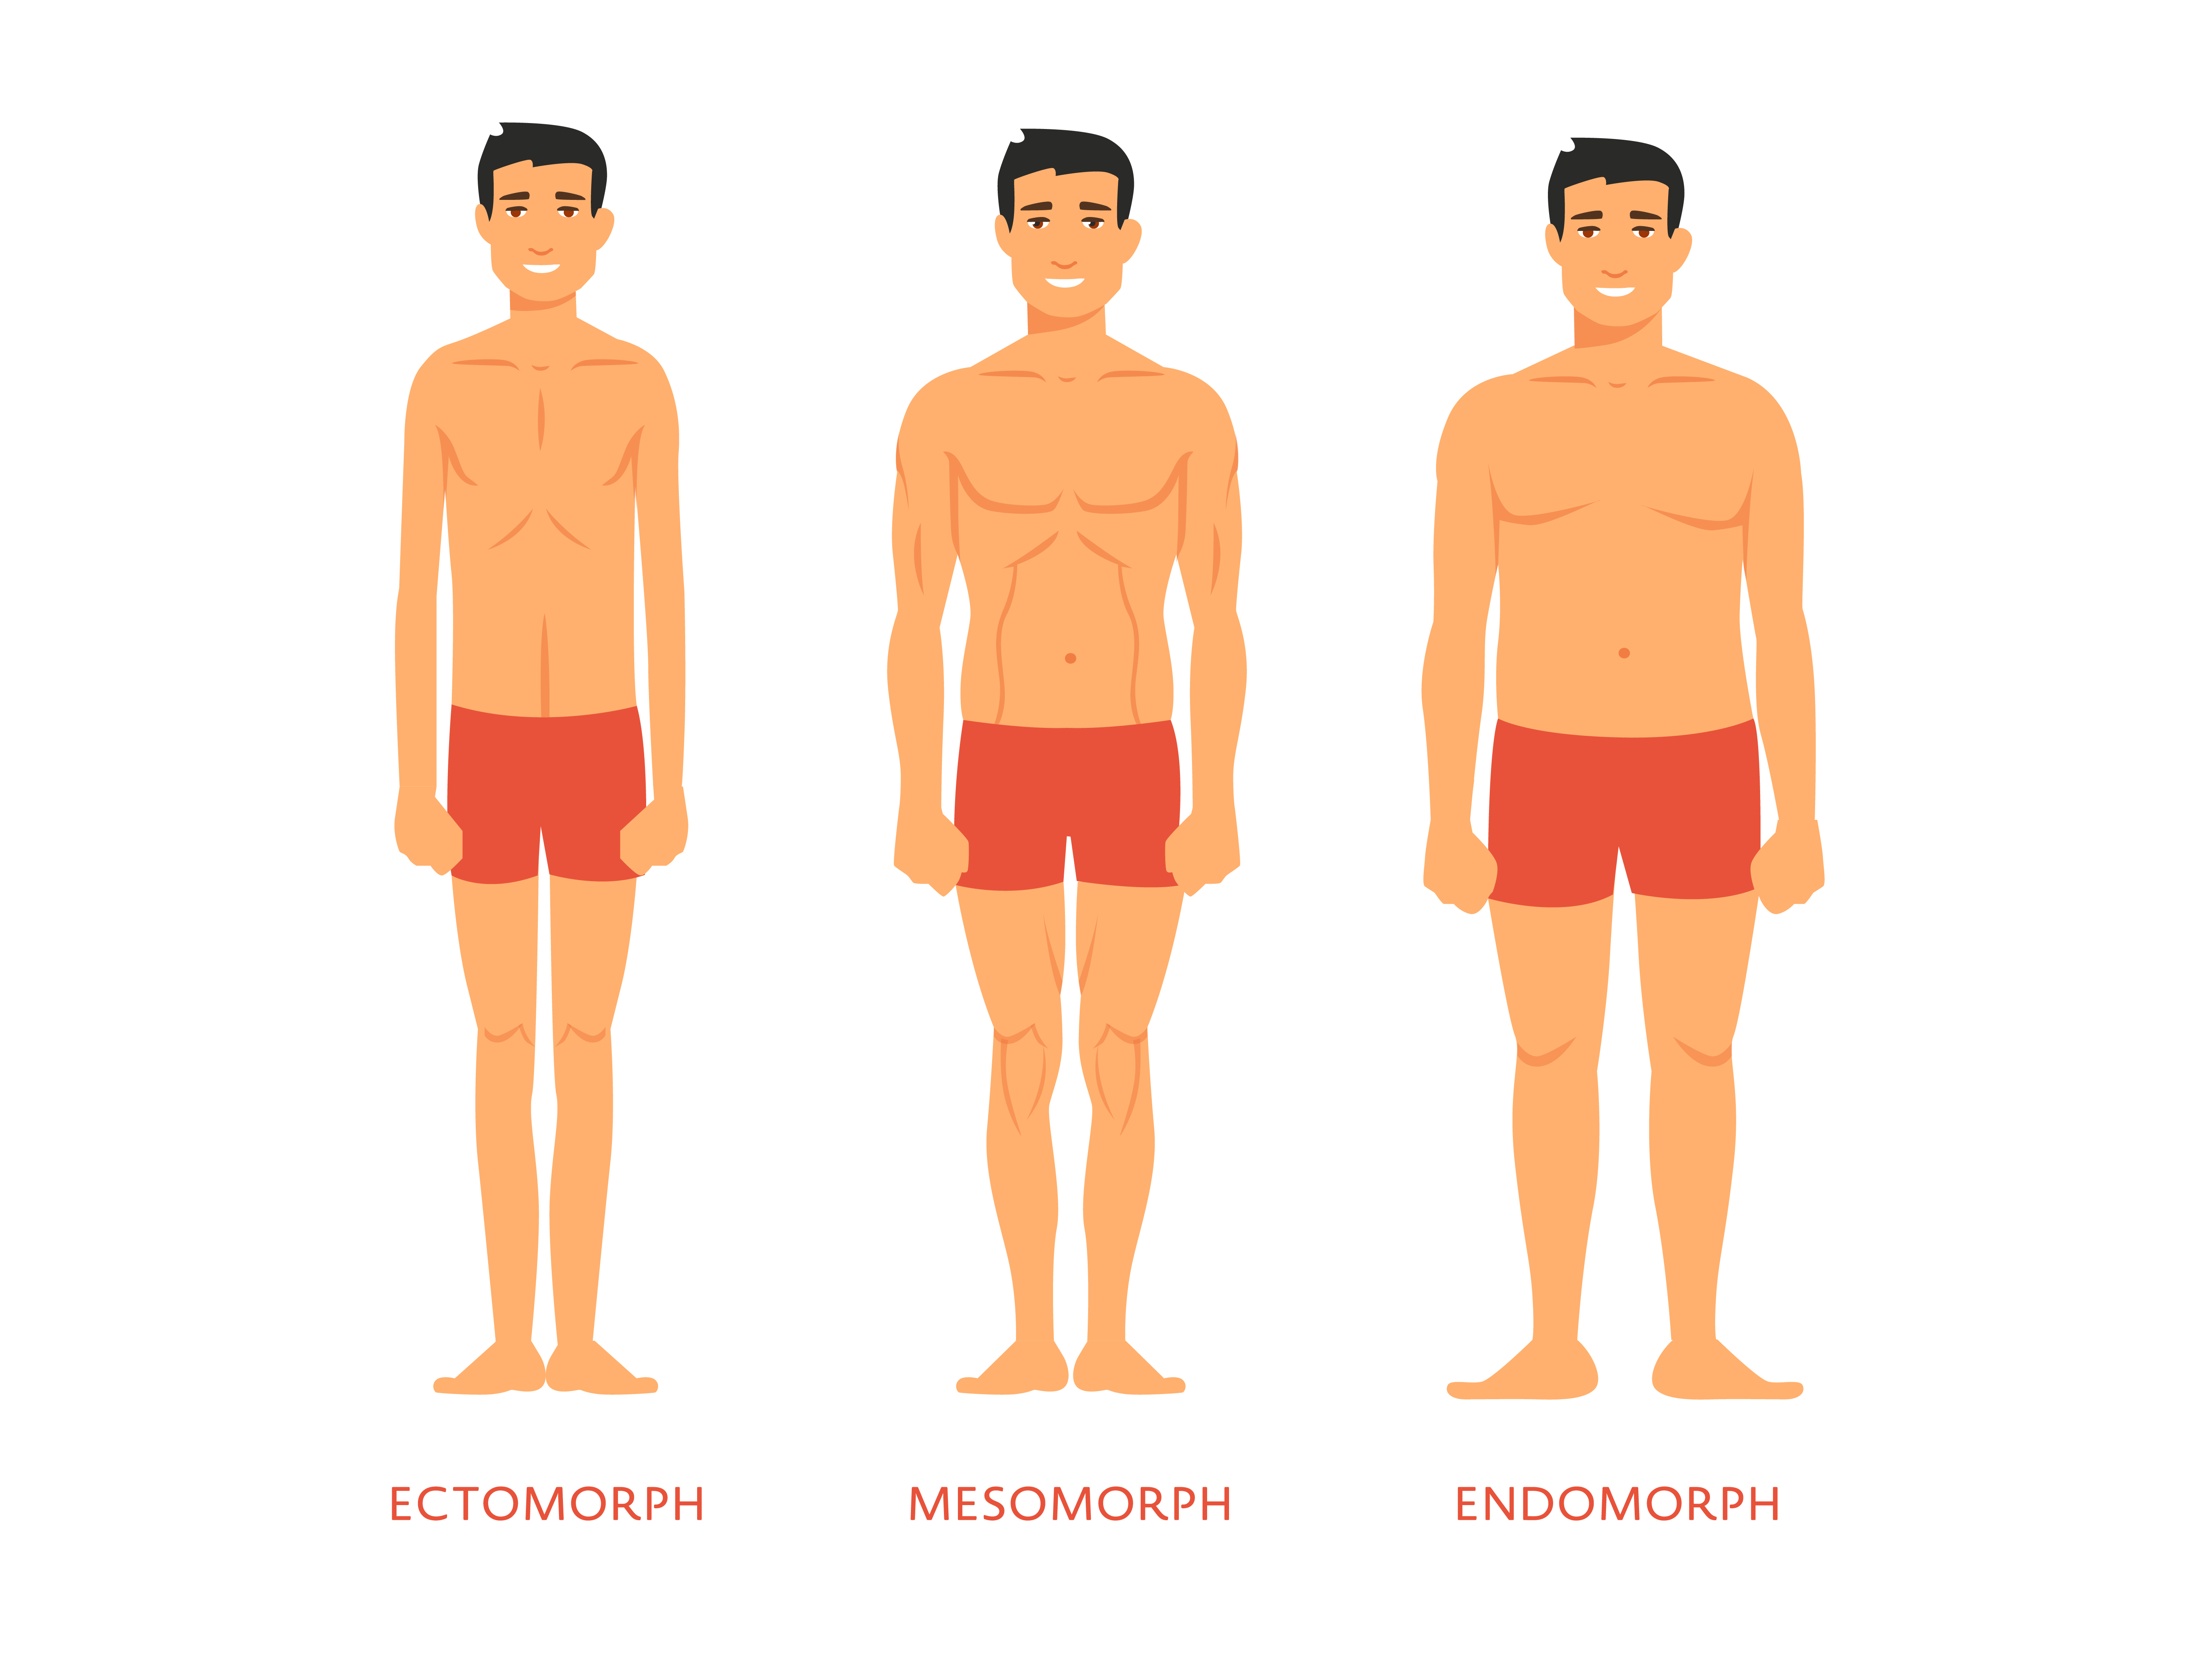 Ectomorph Body Type Explained–Description & Characteristics